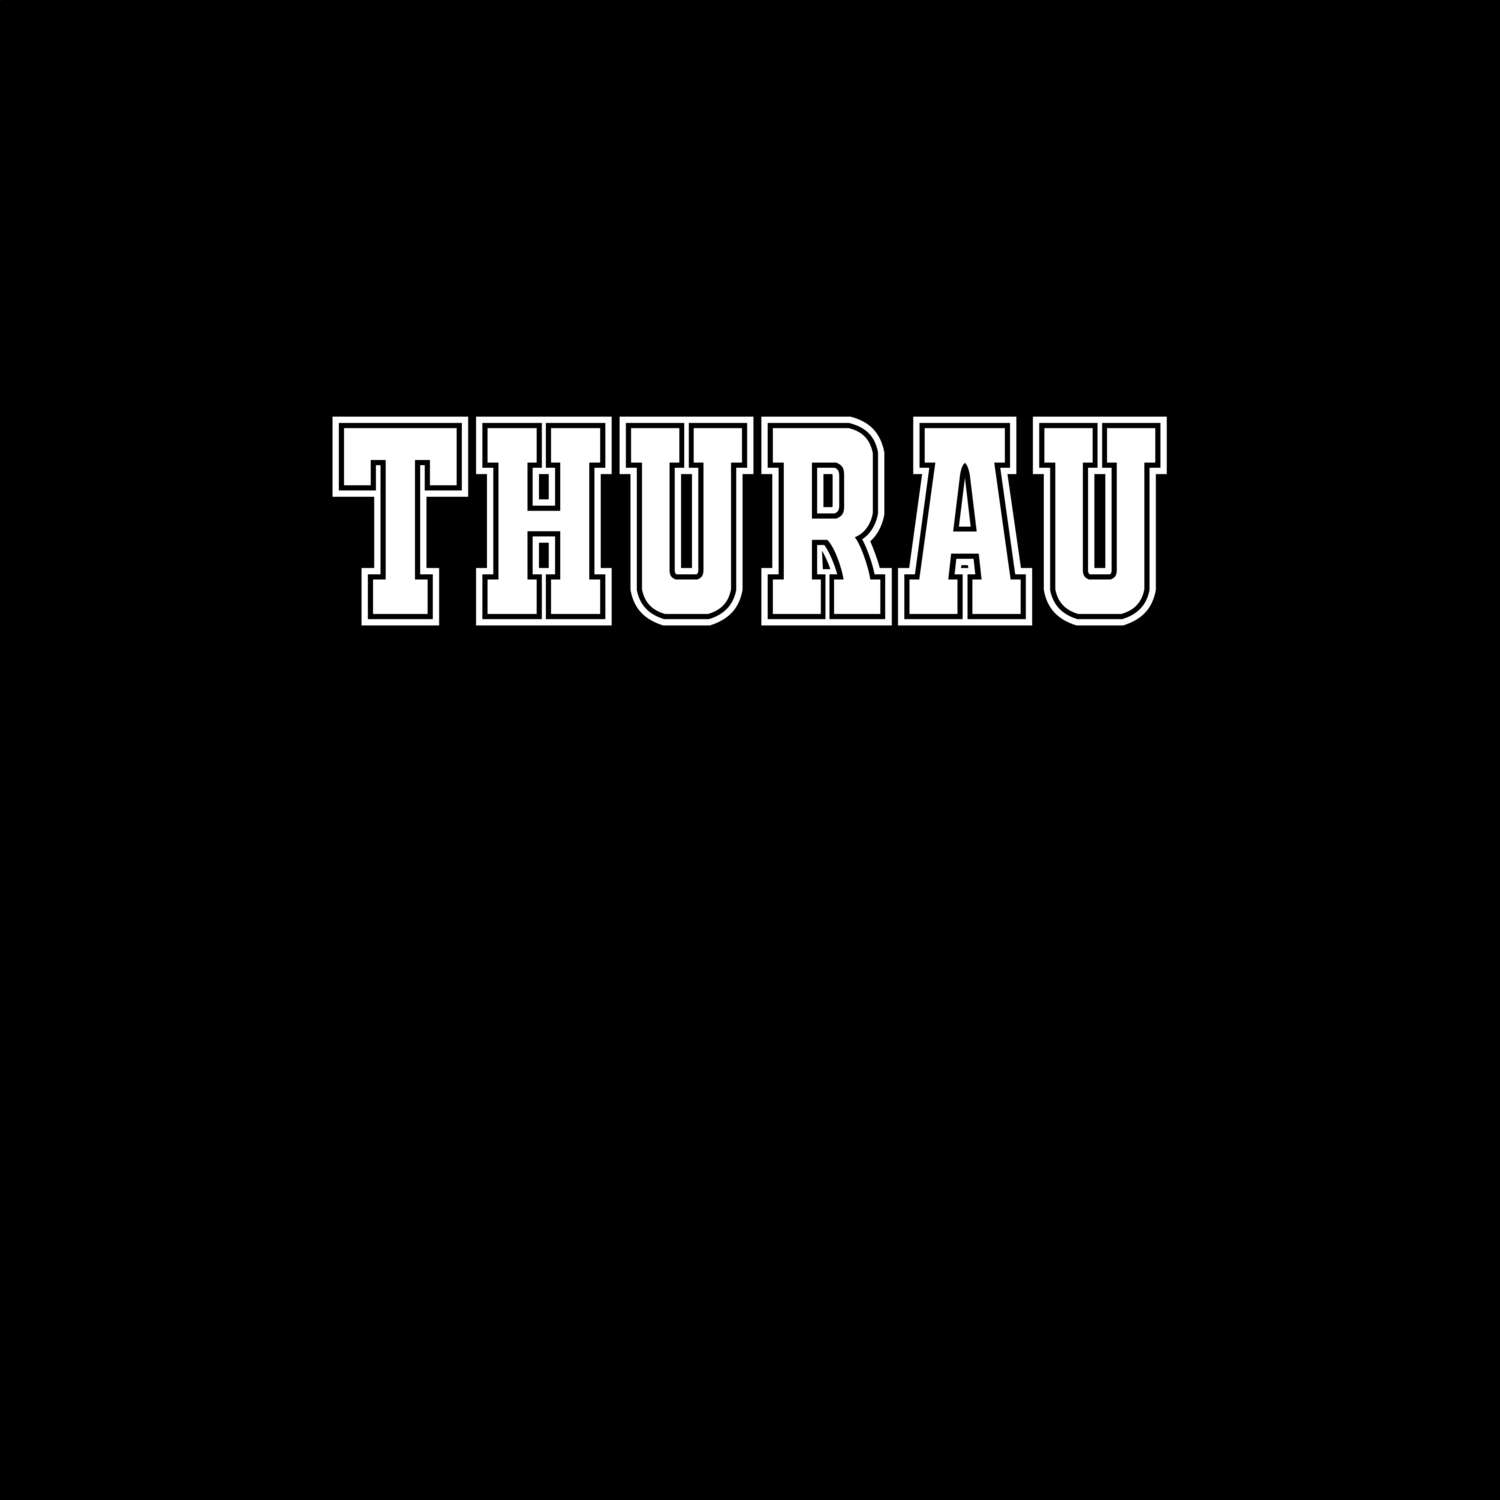 Thurau T-Shirt »Classic«